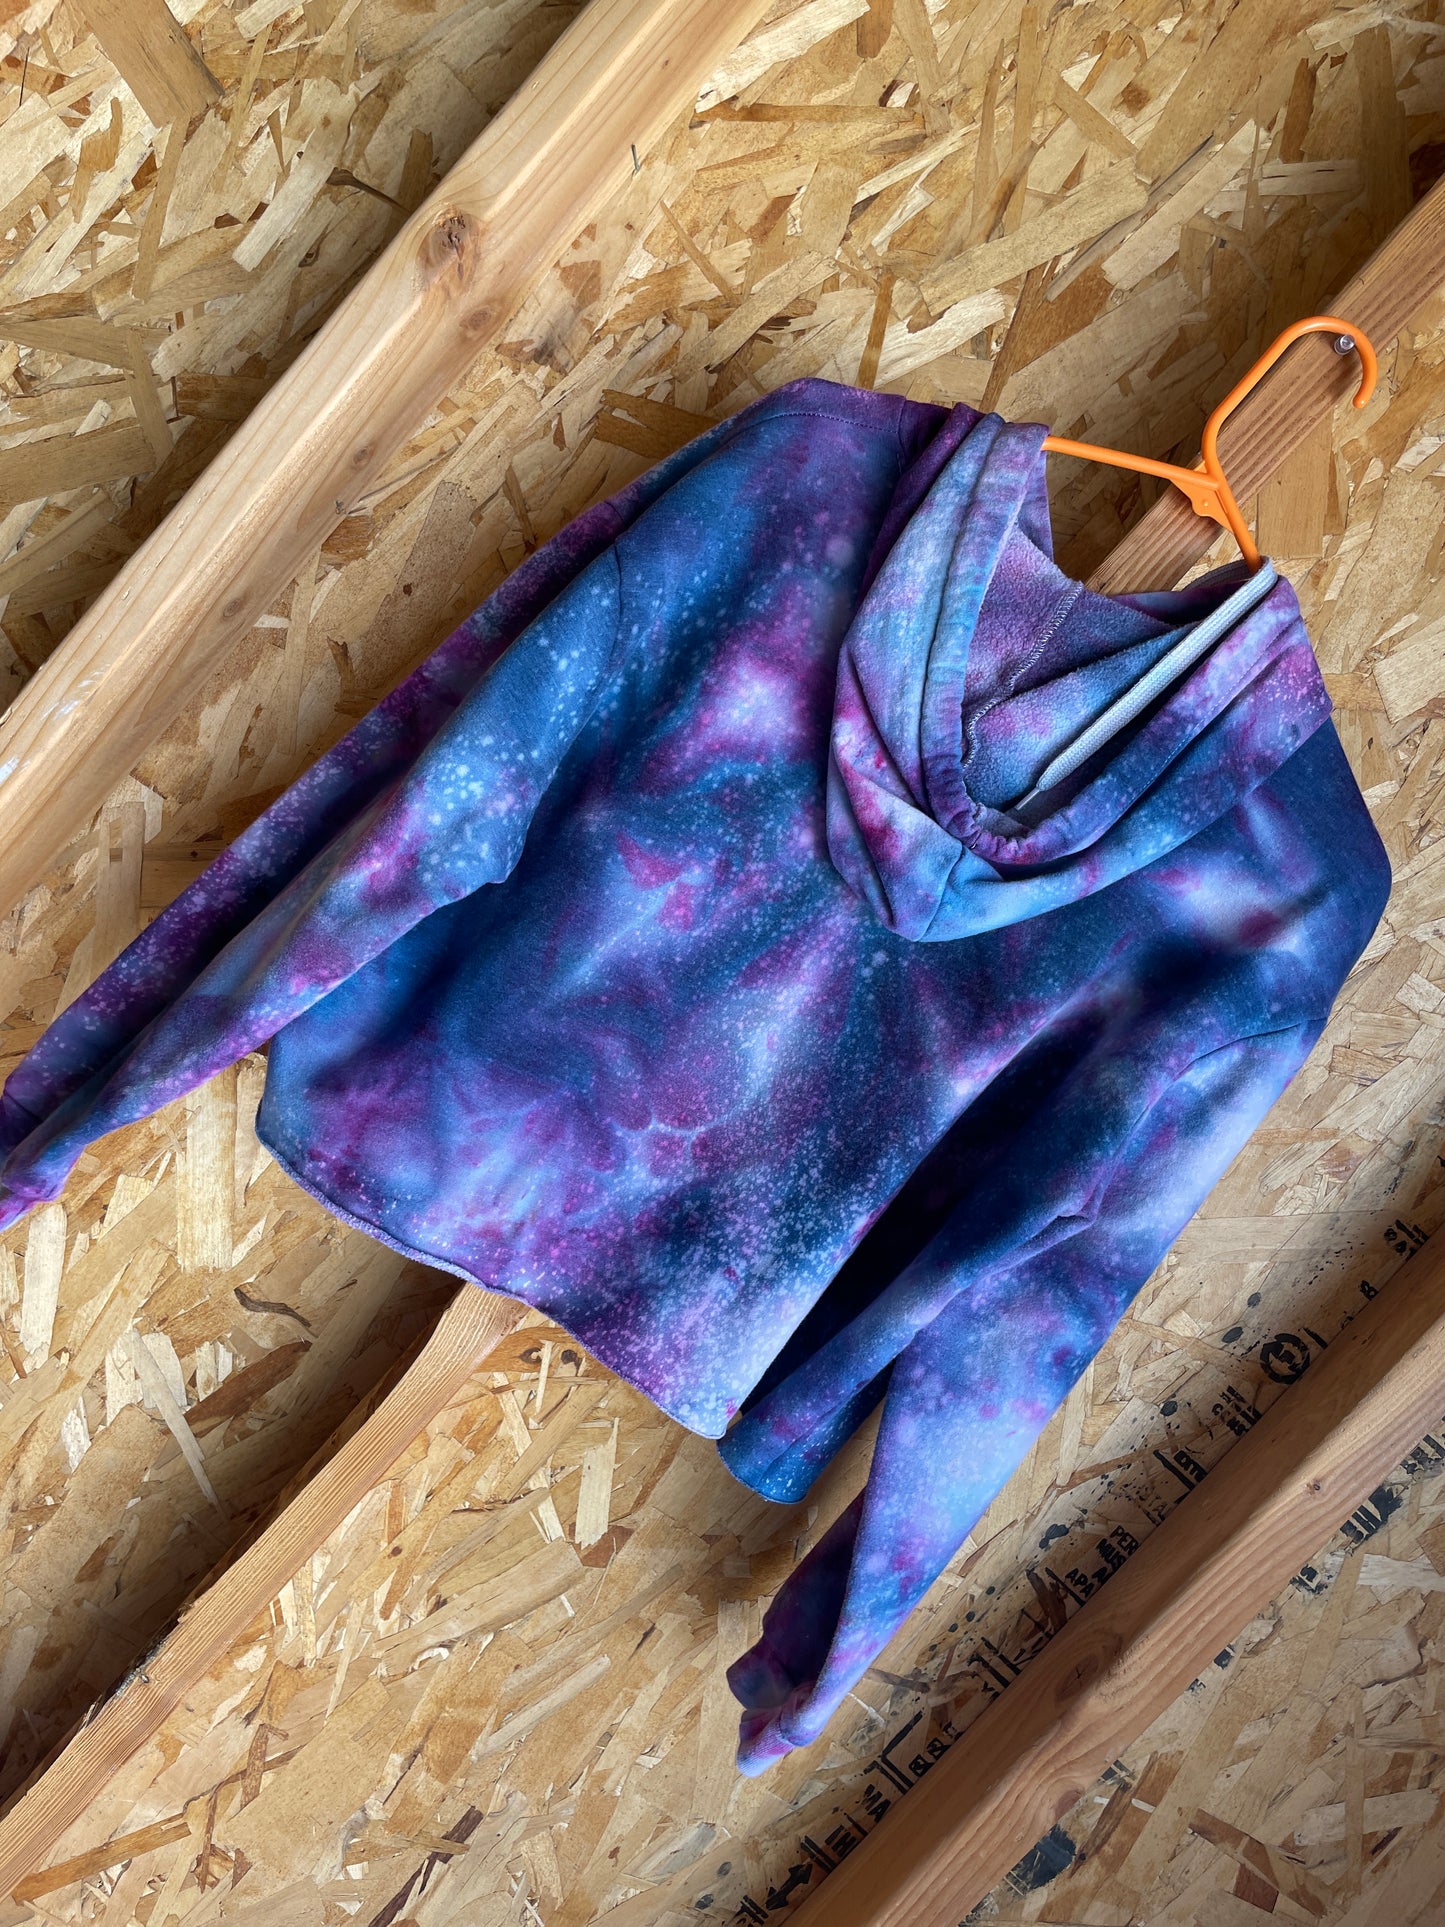 Small Women’s Coca-Cola Handmade Tie Dye Cropped Hoodie | Blue and Purple Galaxy Ice Dye Tie Dye Short Sleeve